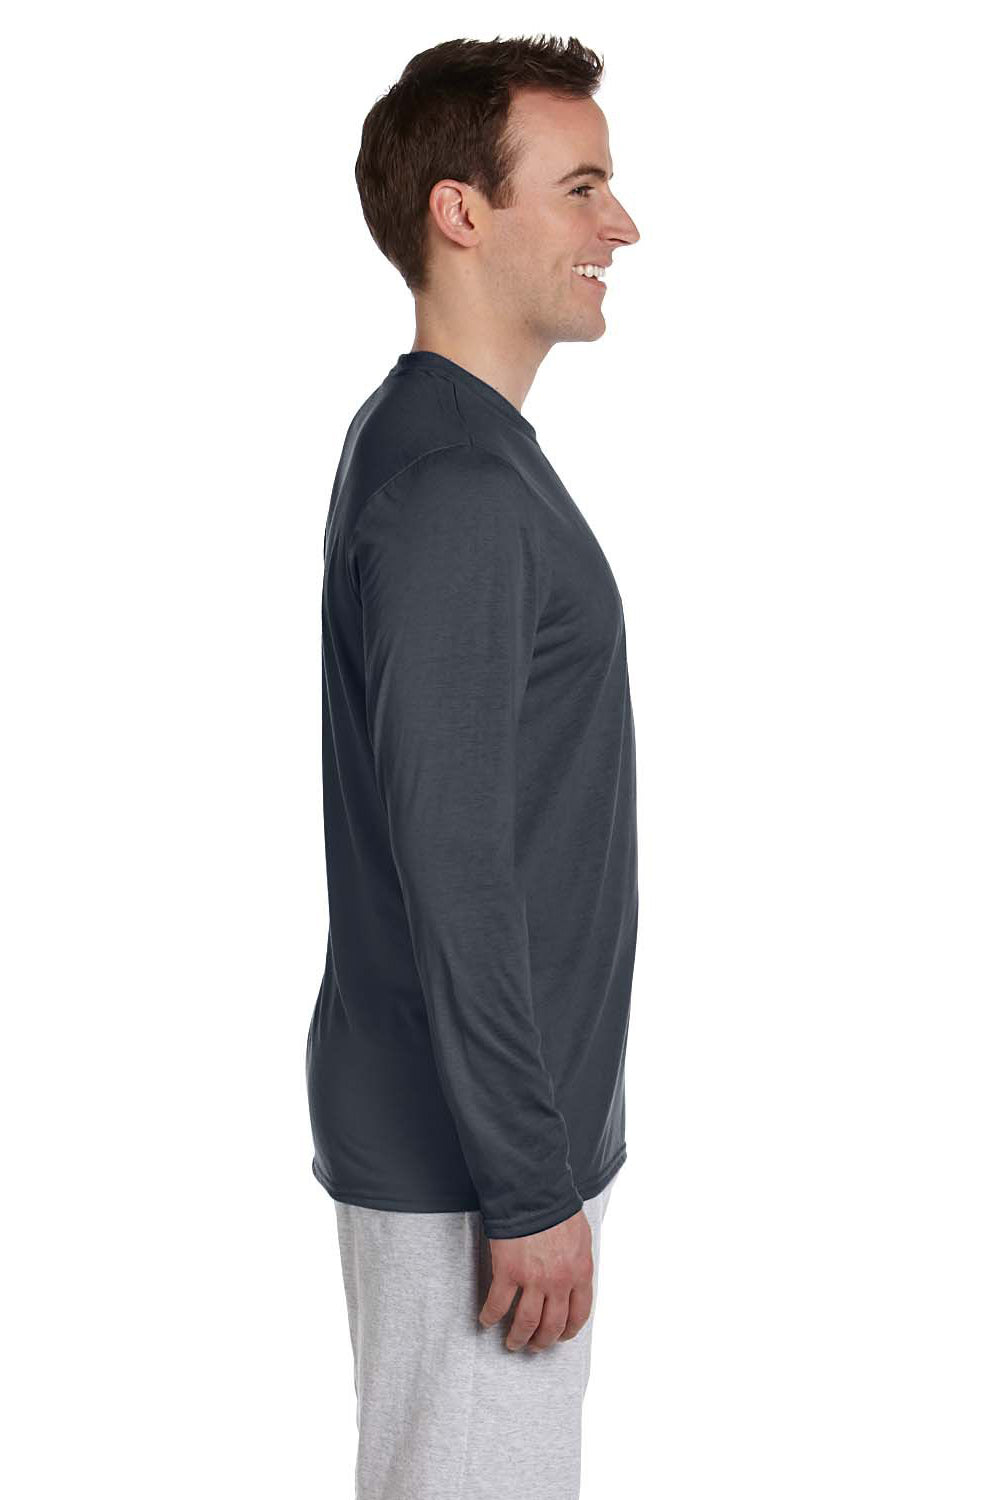 Gildan G424 Mens Performance Jersey Moisture Wicking Long Sleeve Crewneck T-Shirt Charcoal Grey Side